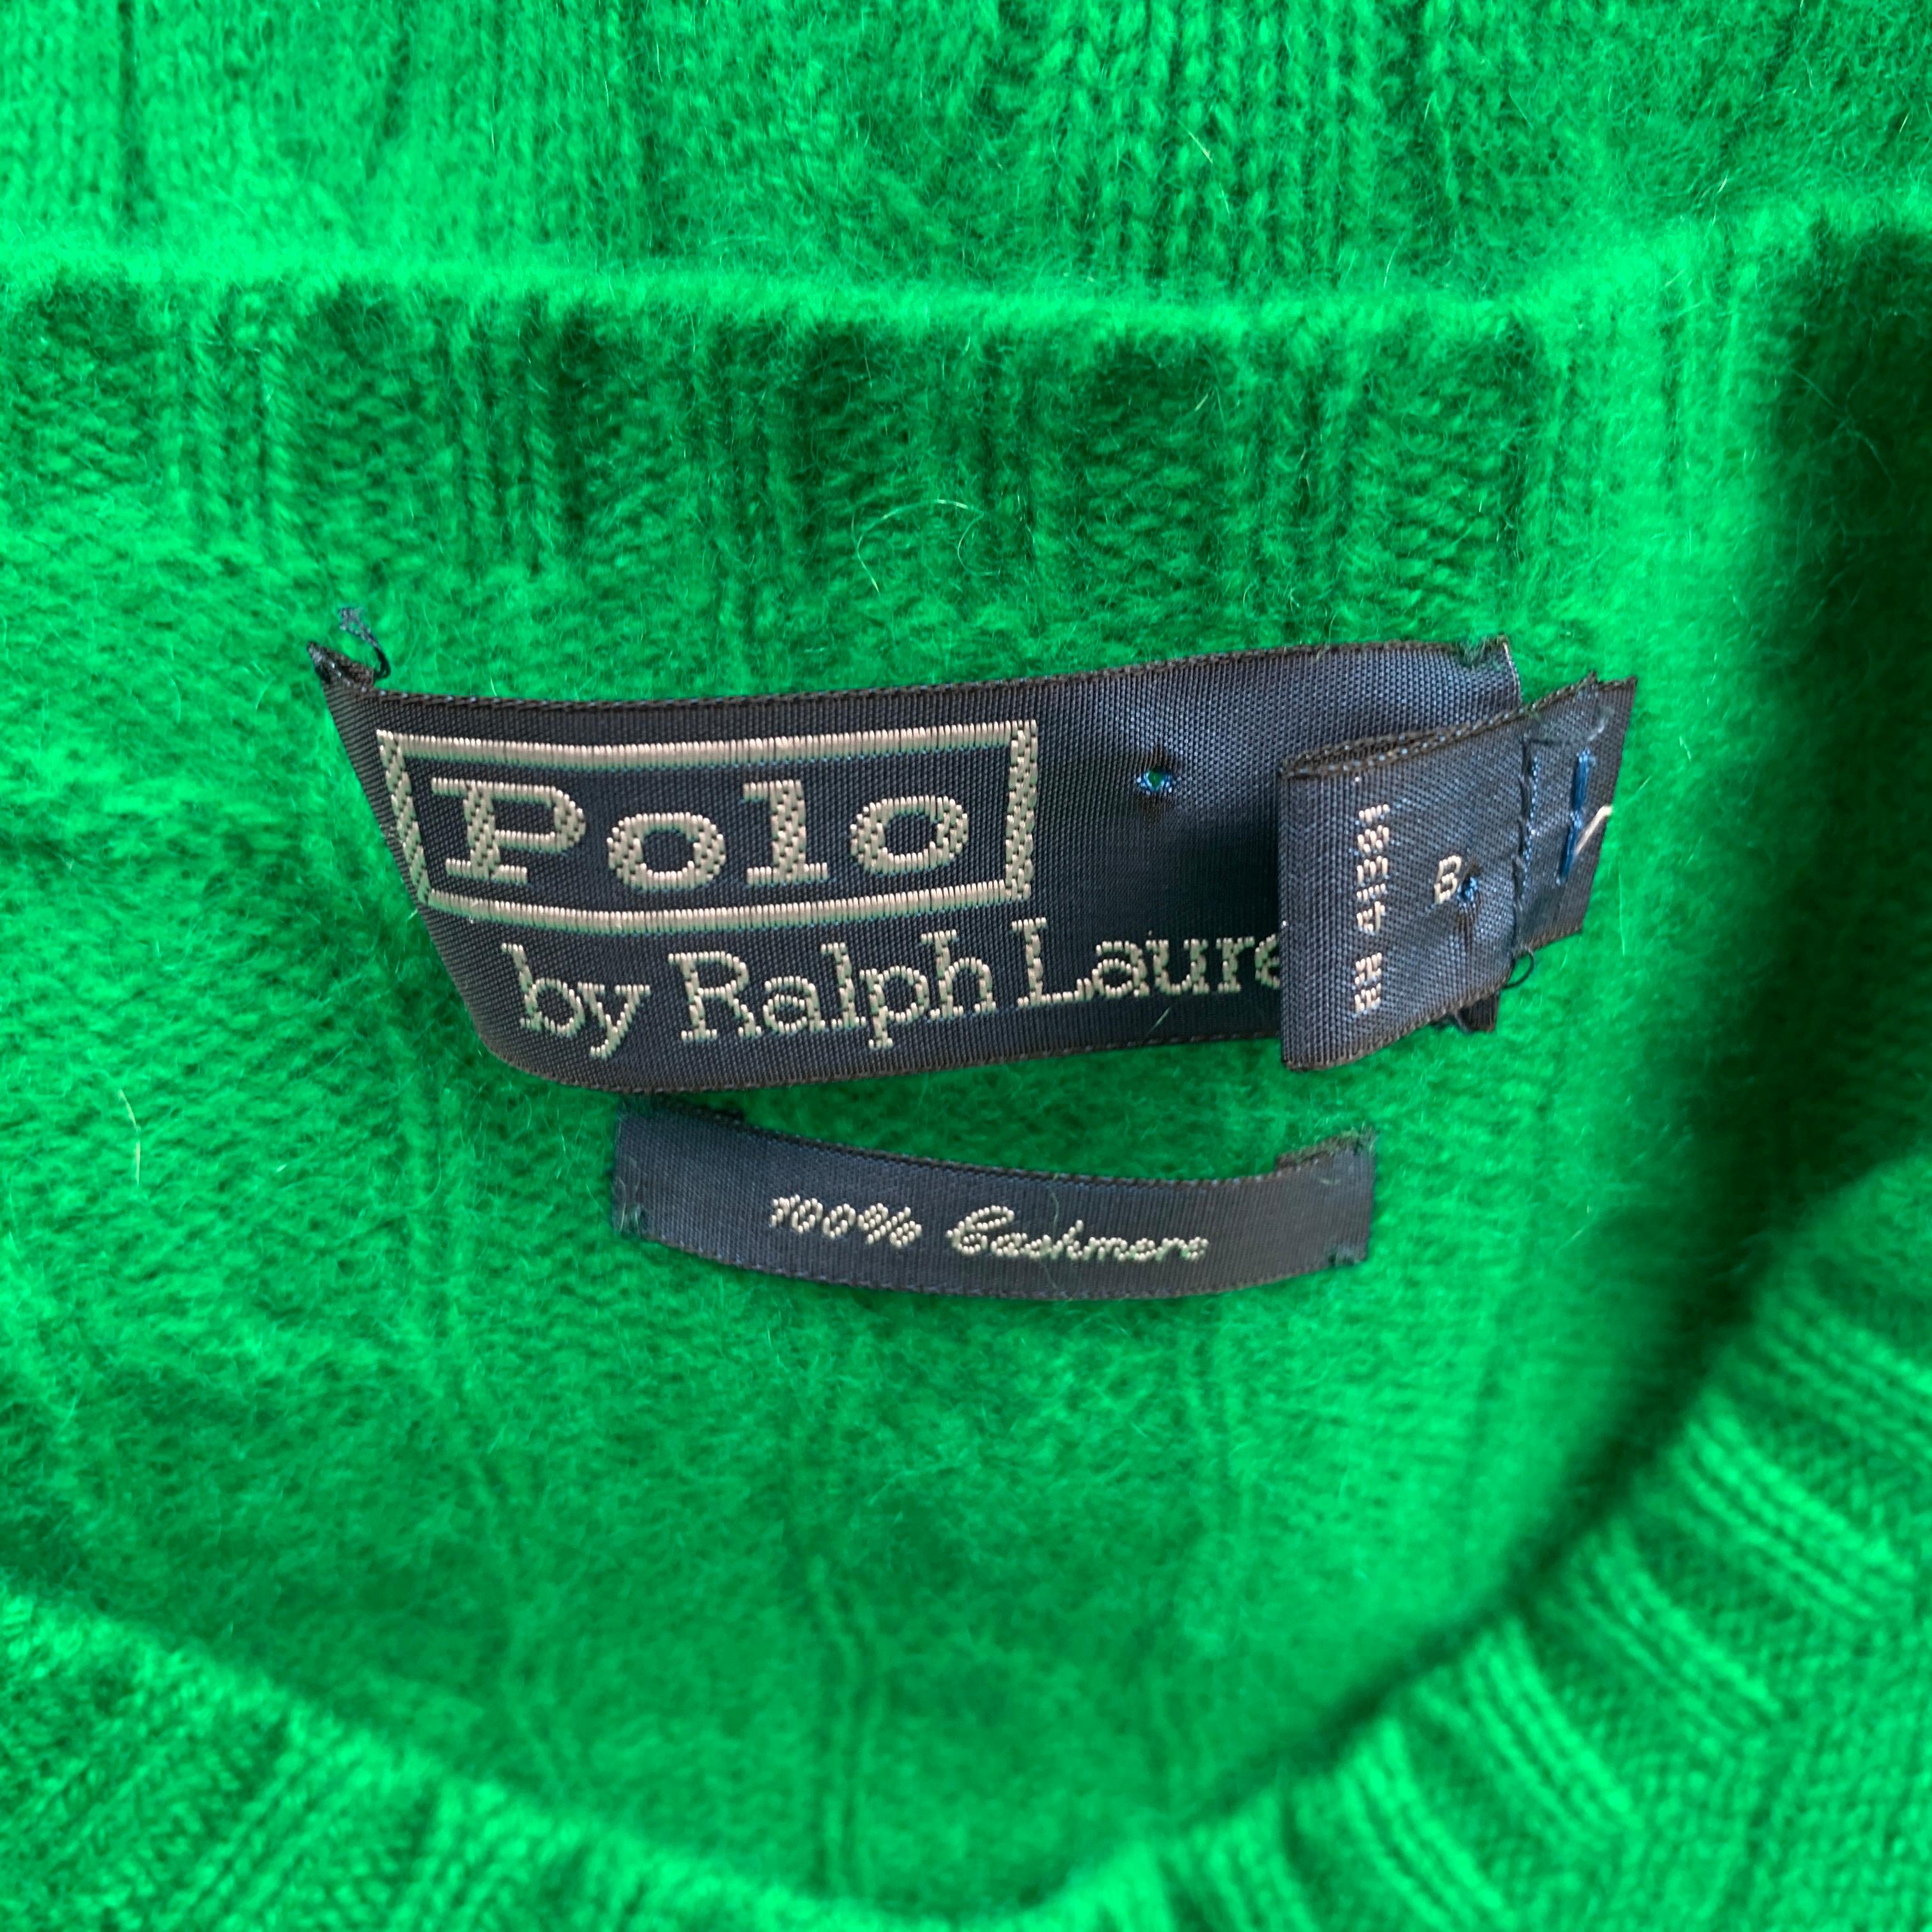 ralph lauren cable knit cashmere sweater